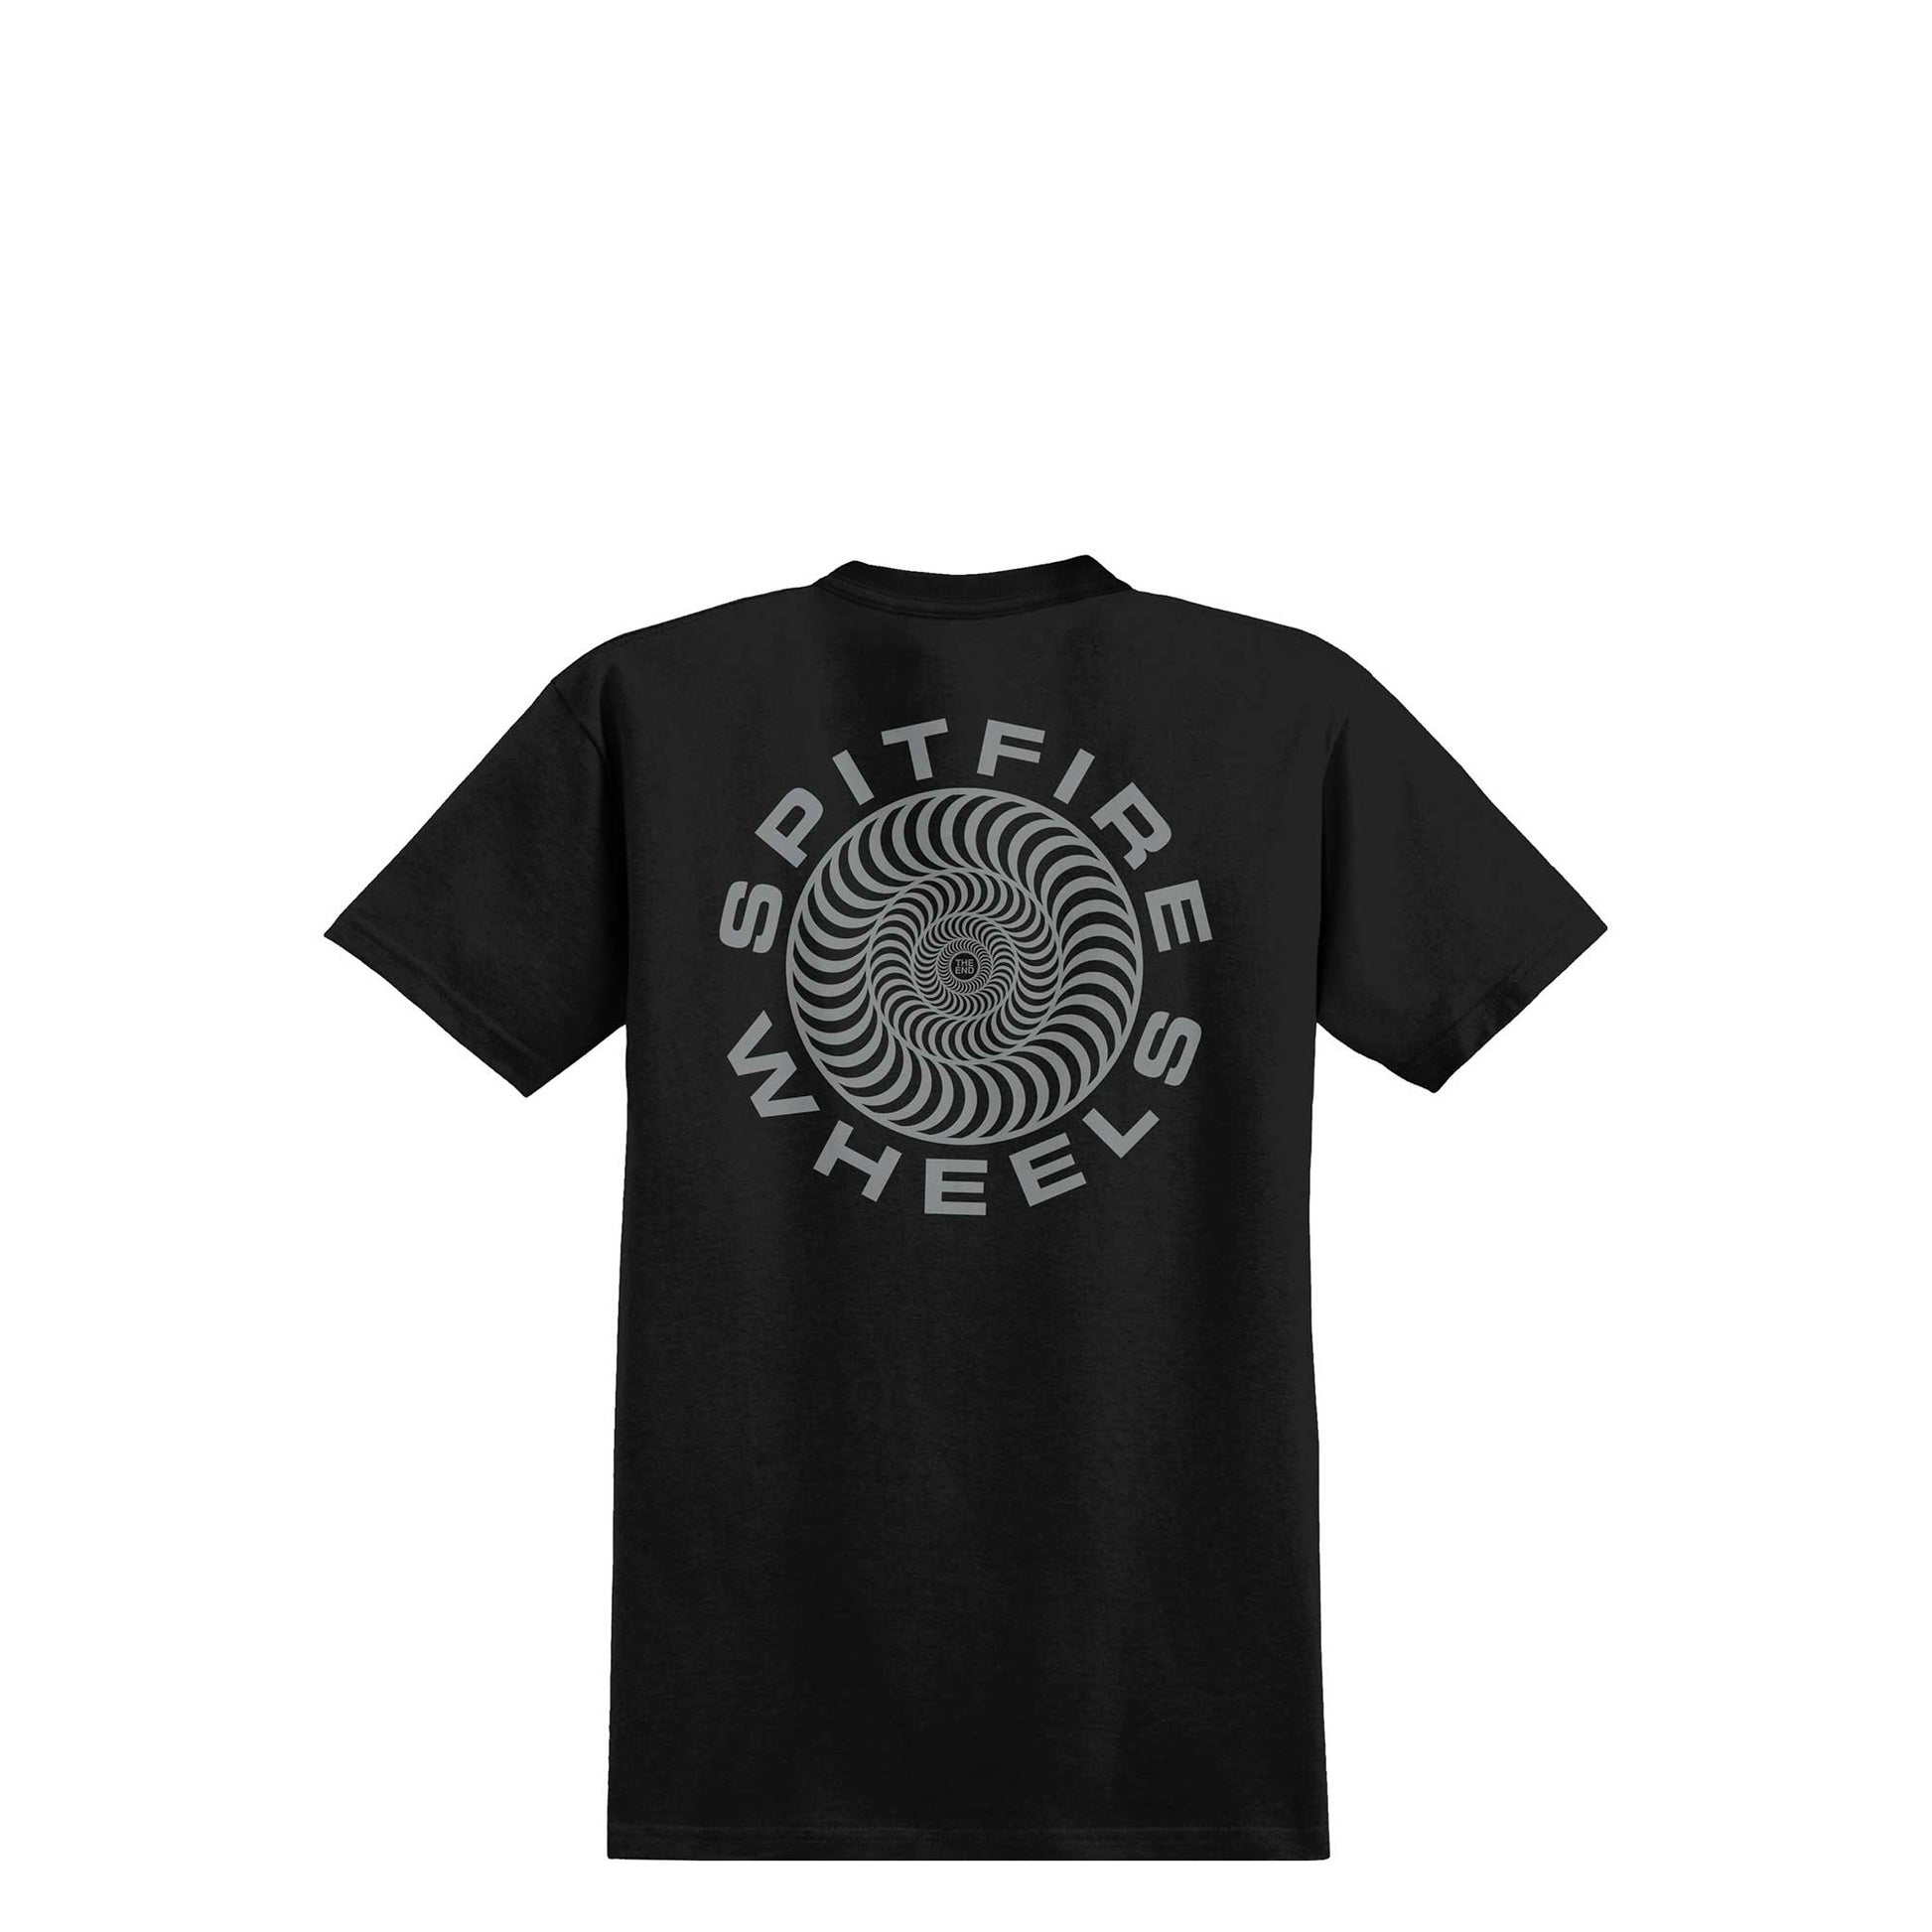 Spitfire Classic 87' Swirl S/S T-Shirt, black w/ silver fleck prints - Tiki Room Skateboards - 2